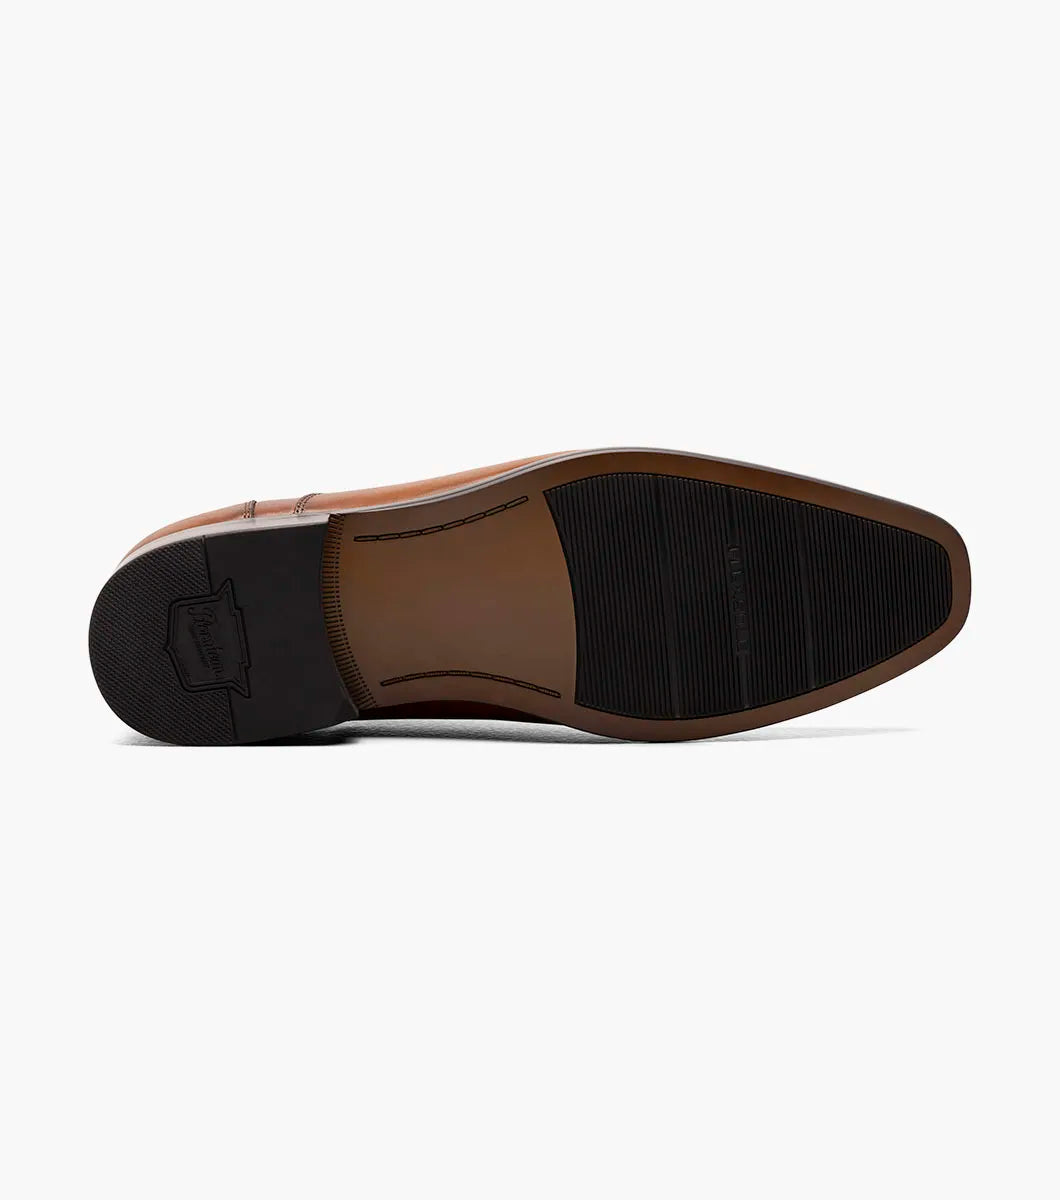 Florsheim Mens Postino Cognac Brown Slip On Loafer Leather Dress Shoes